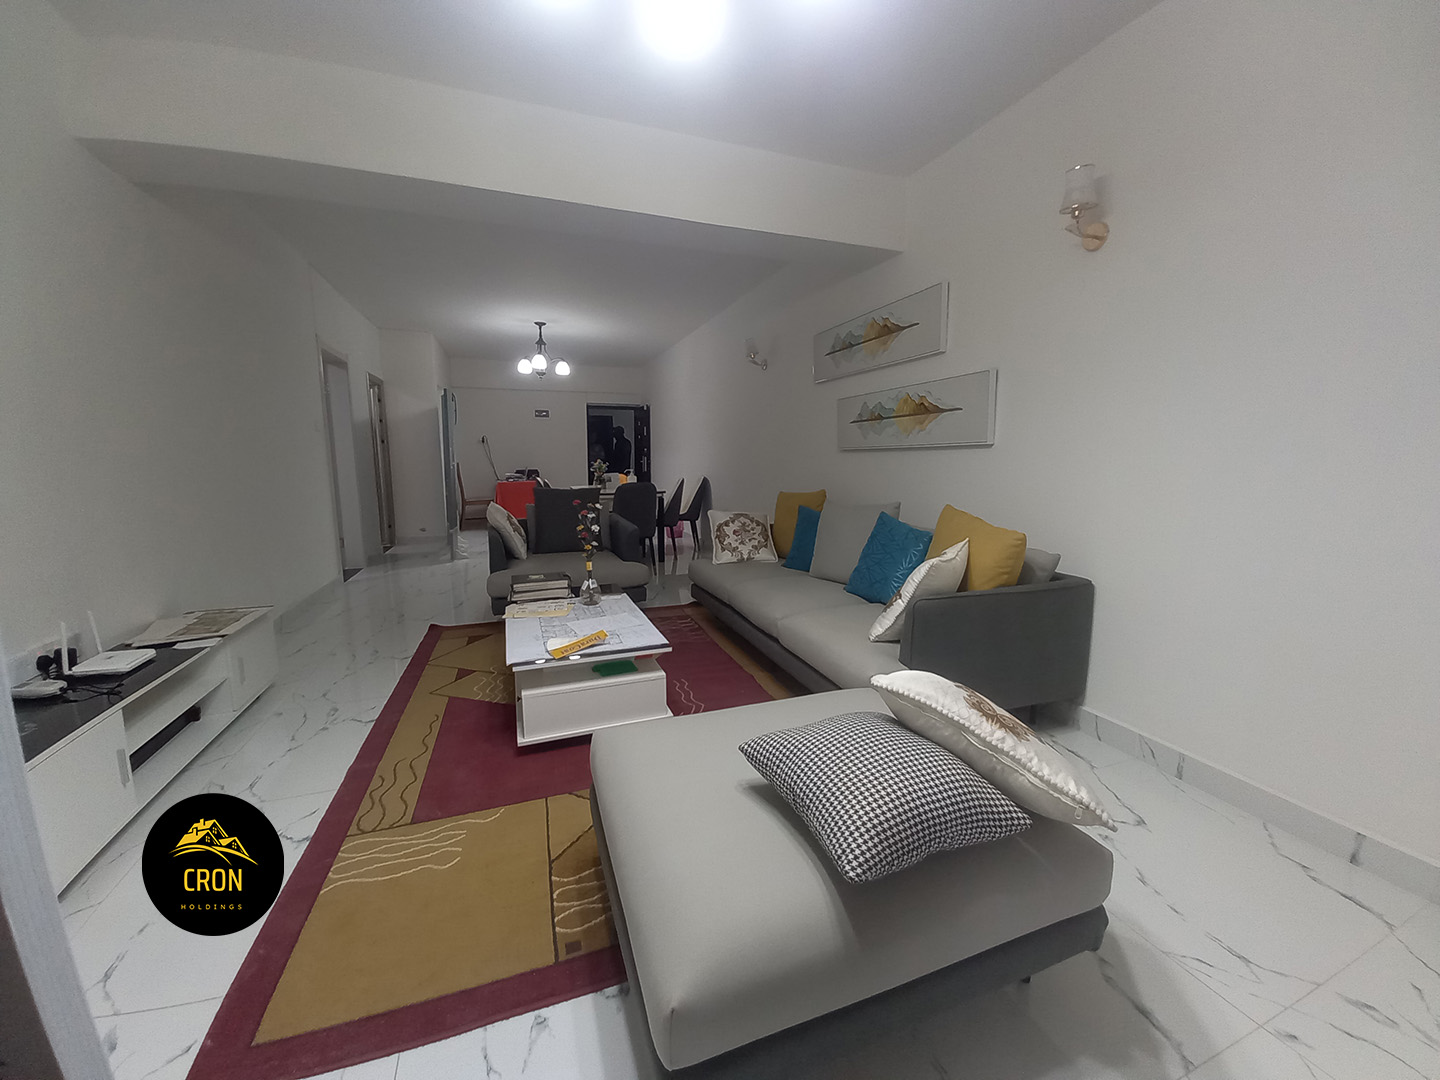 2 Bedroom Furnished apartment for rent Kilimani | Cron Holdings